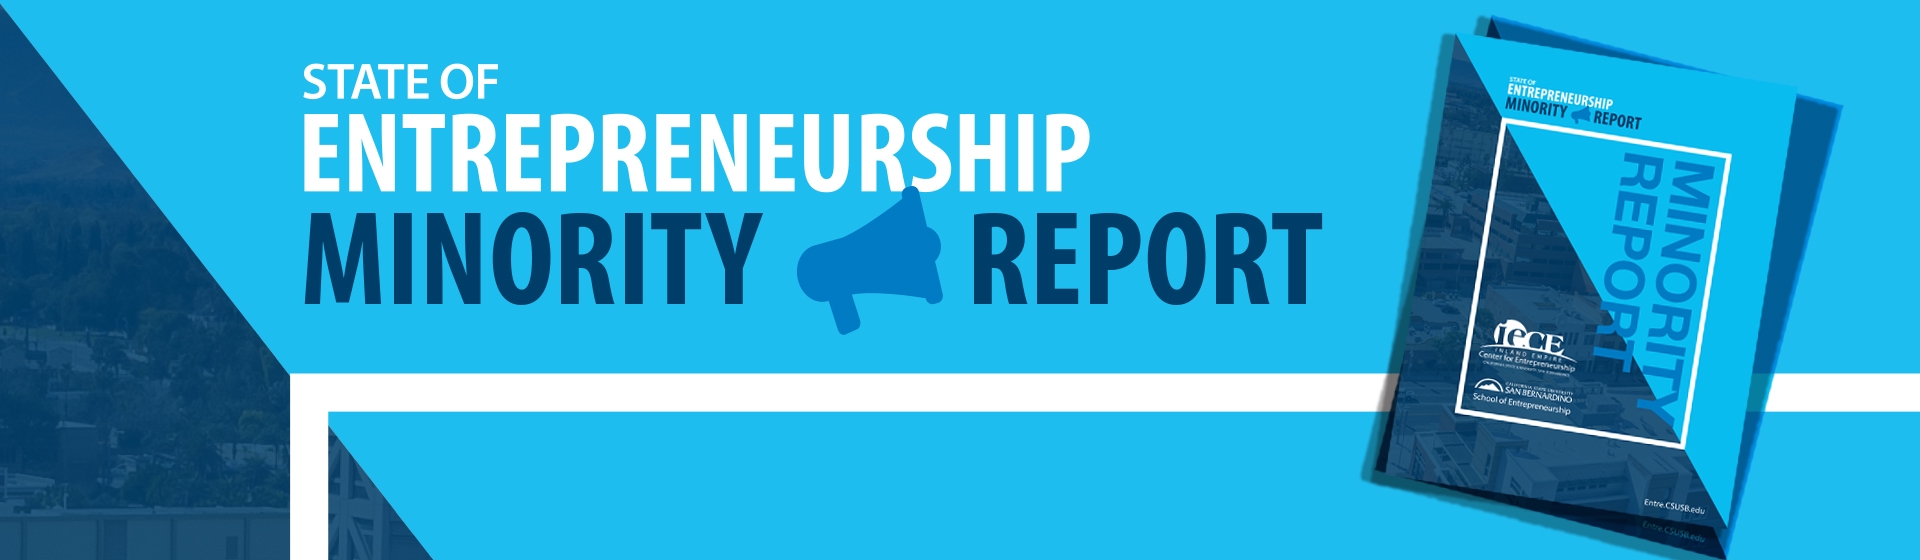 IECE State of Entrepreneurship Minority Report graphic